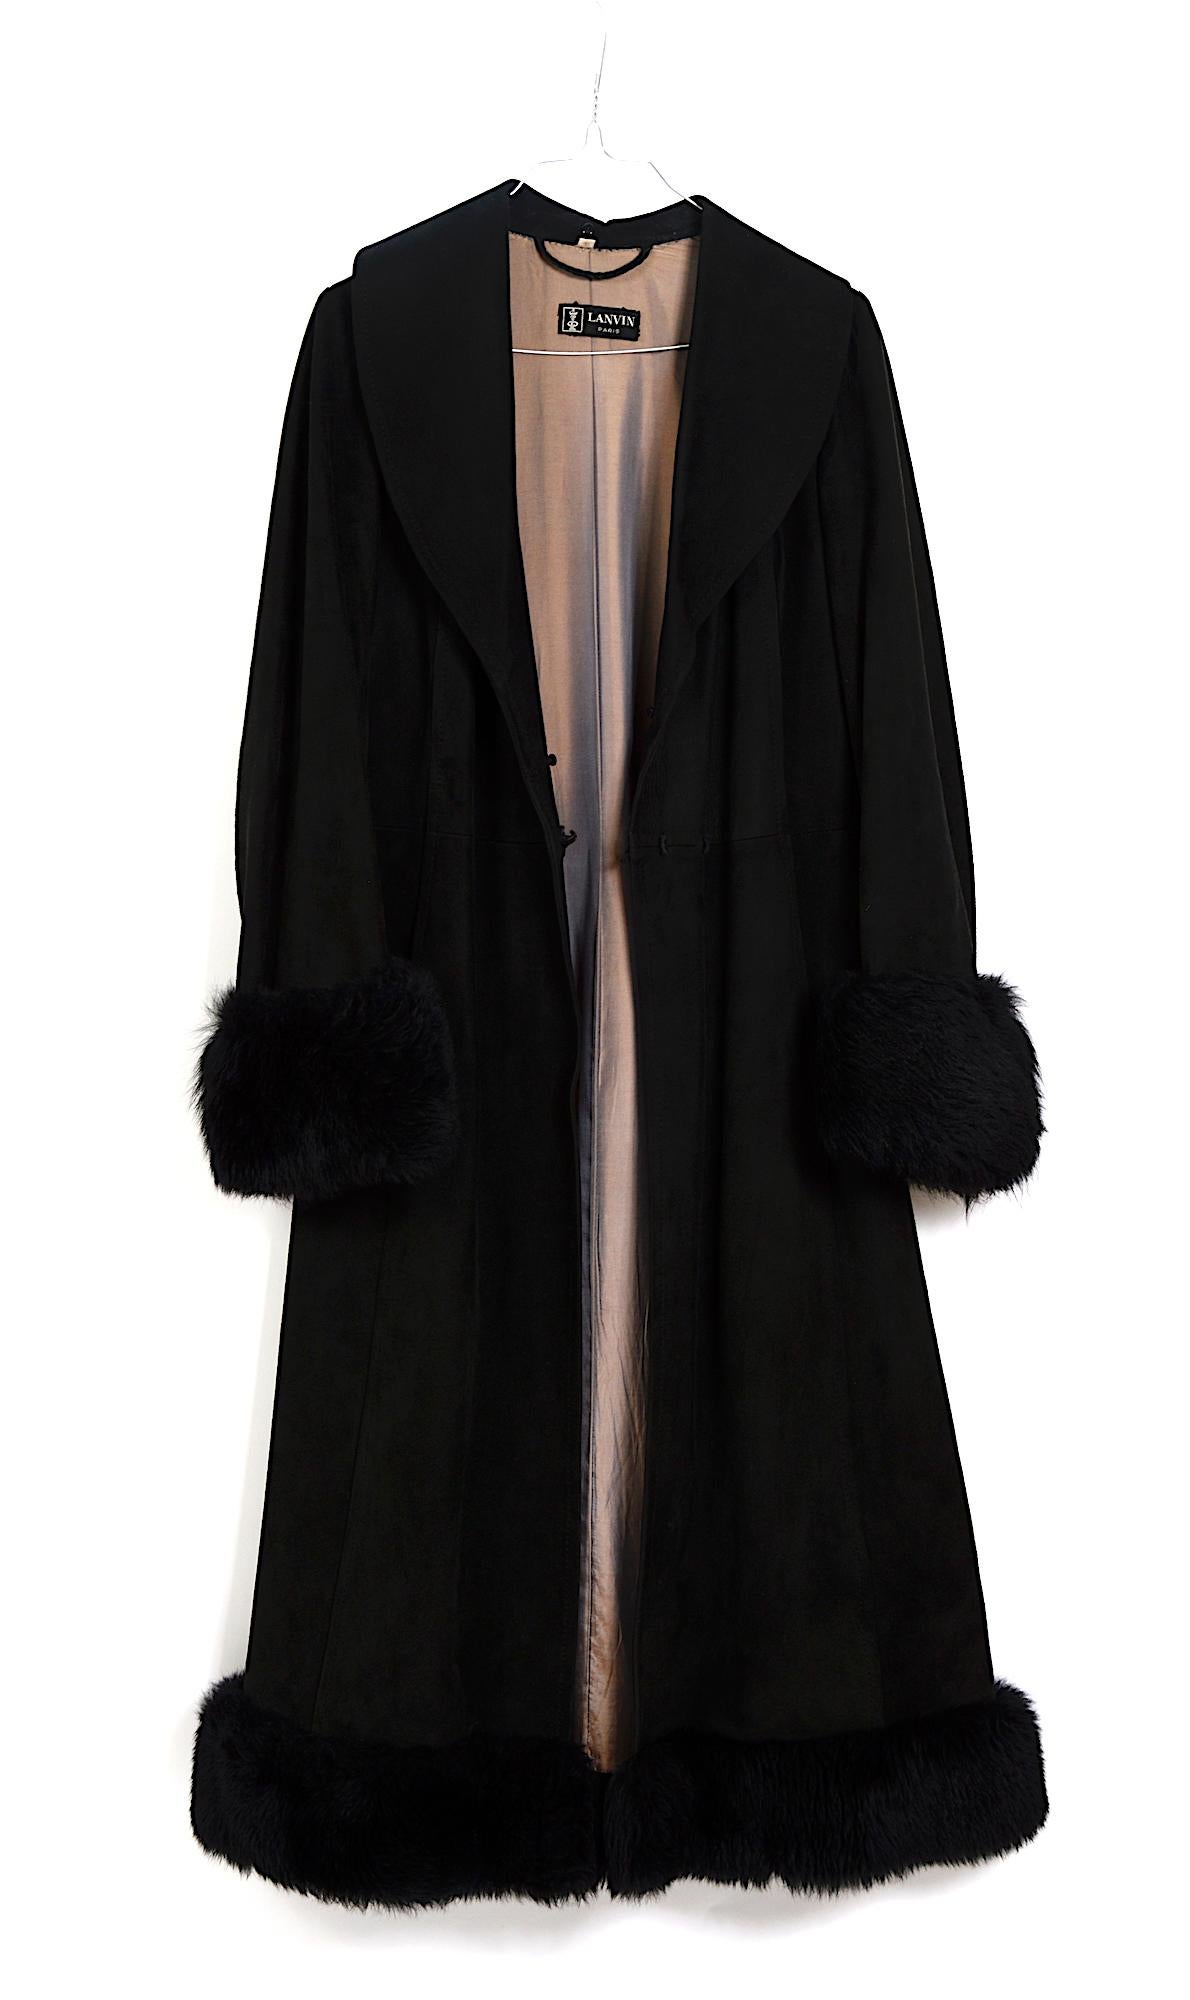 Lanvin vintage 1960s black suede belted coat with removable fur collar 2